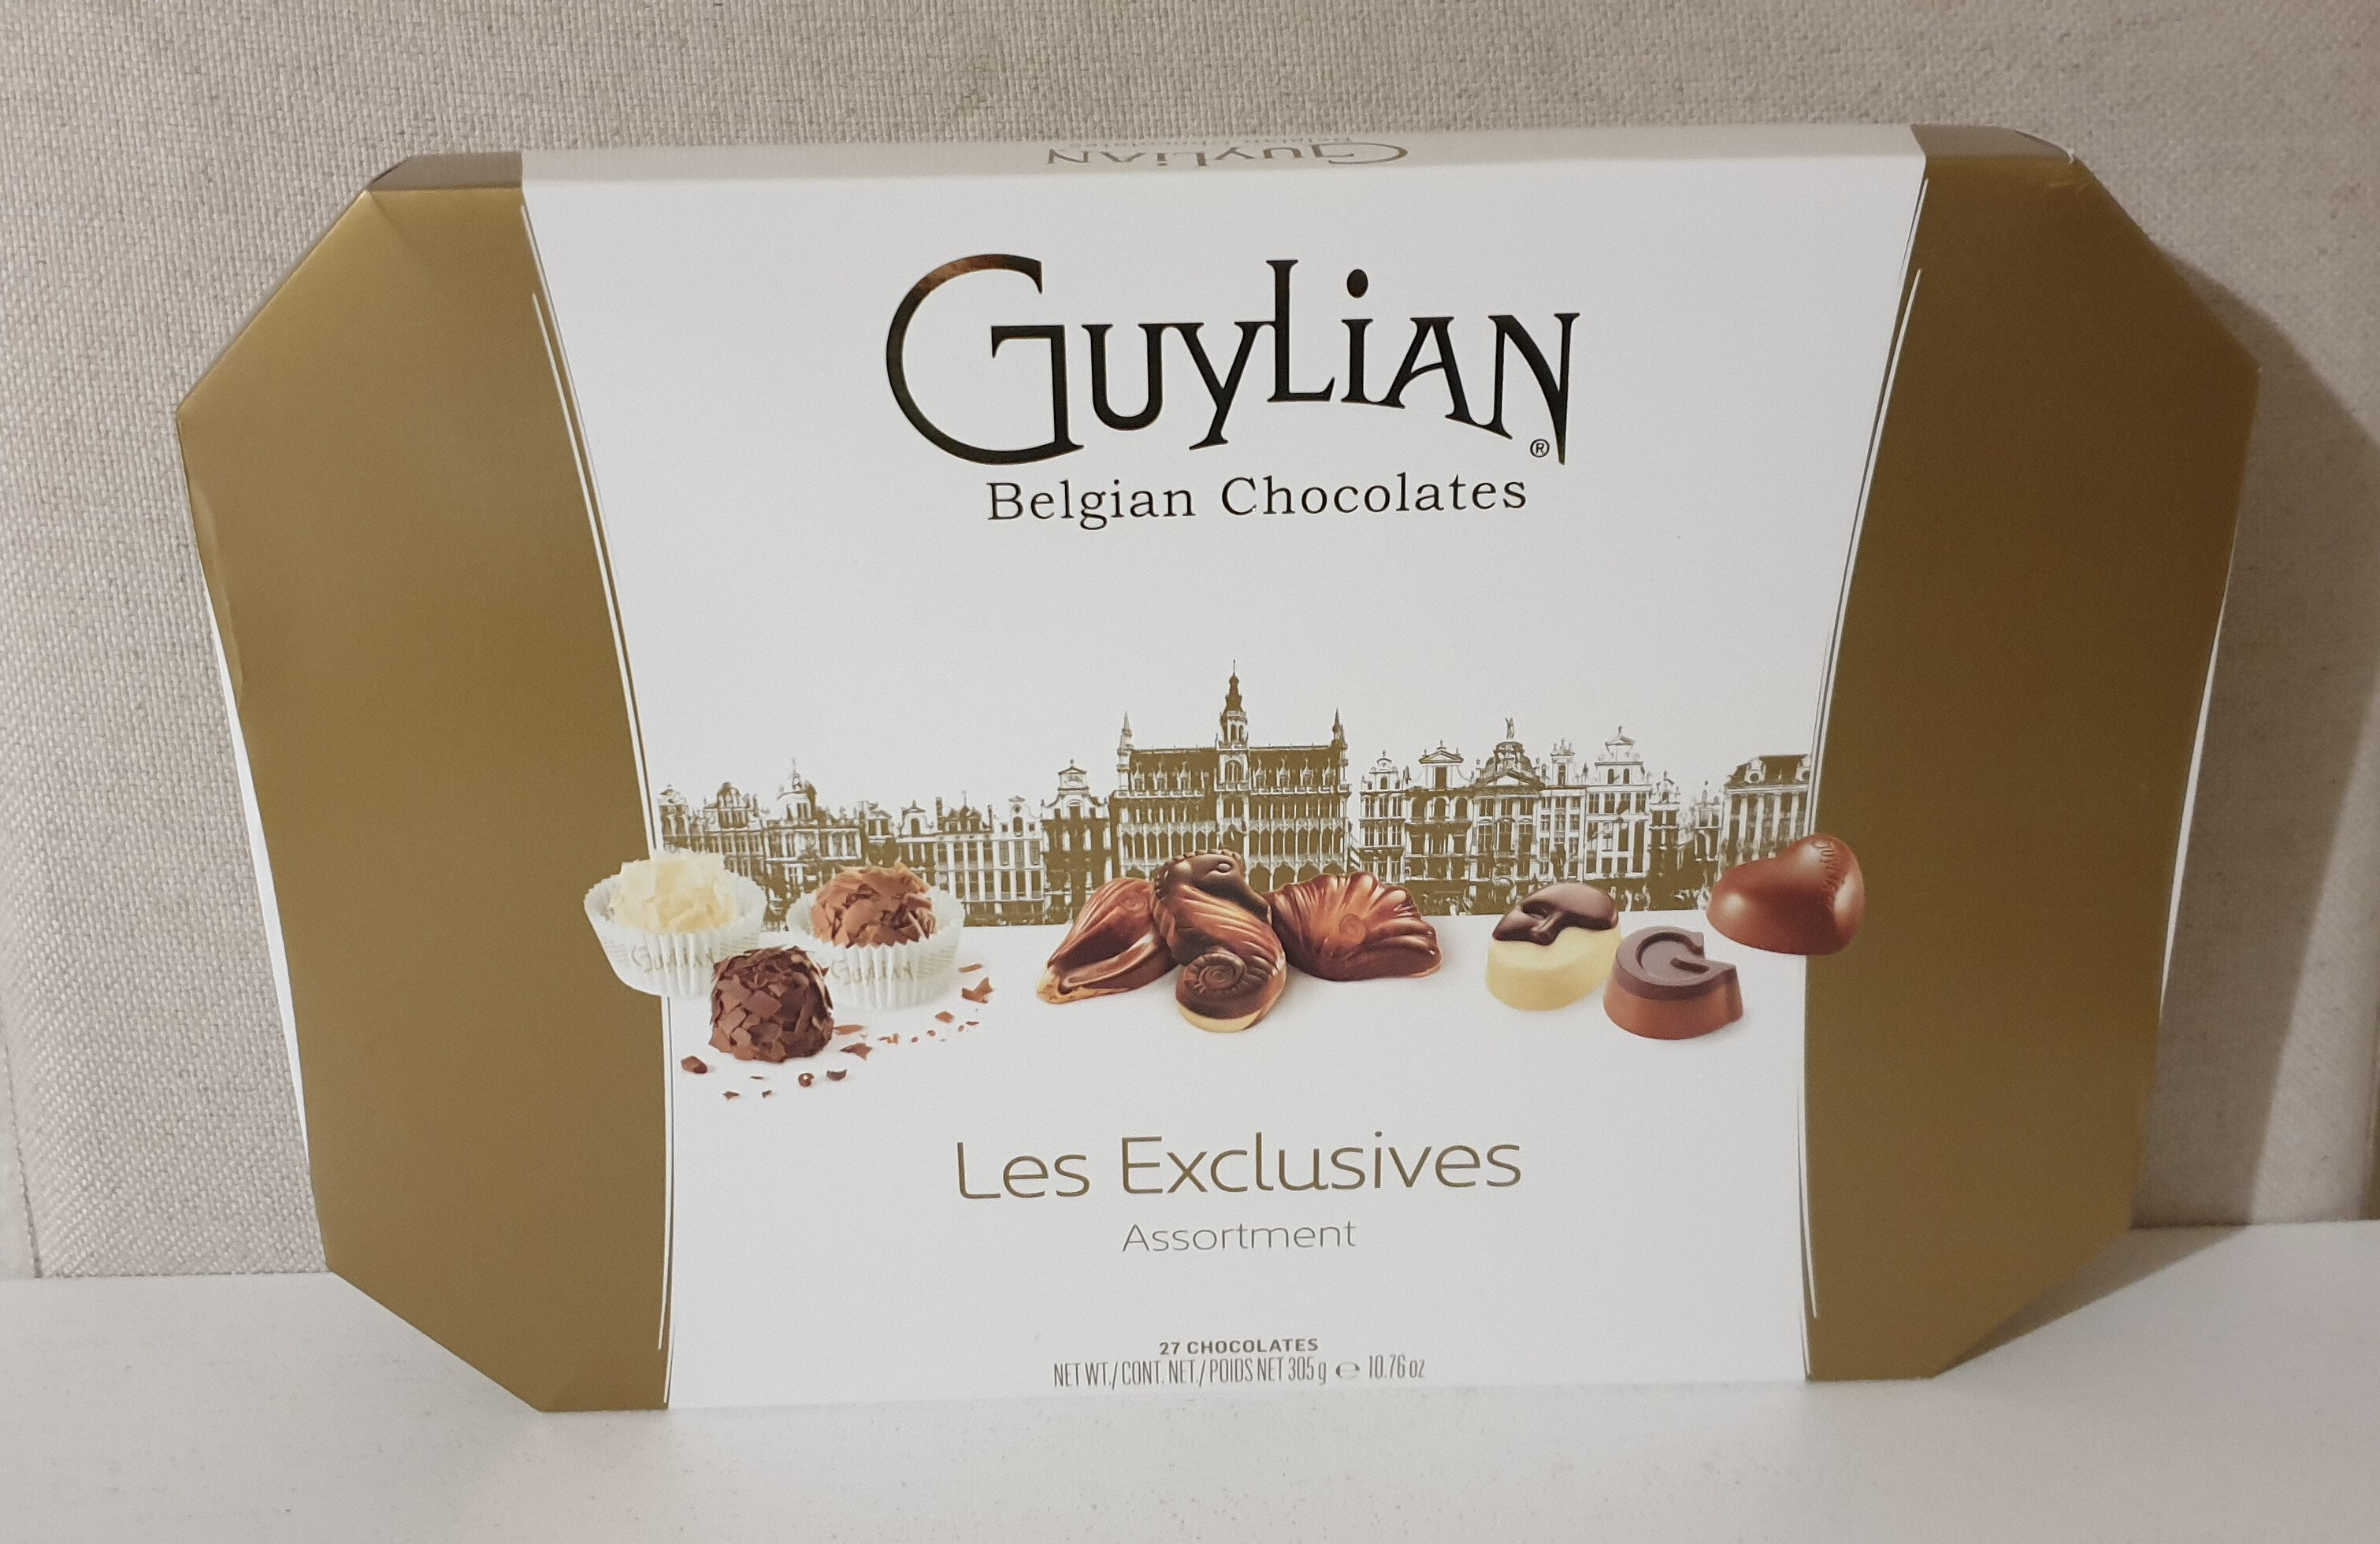 Guylian - Produit